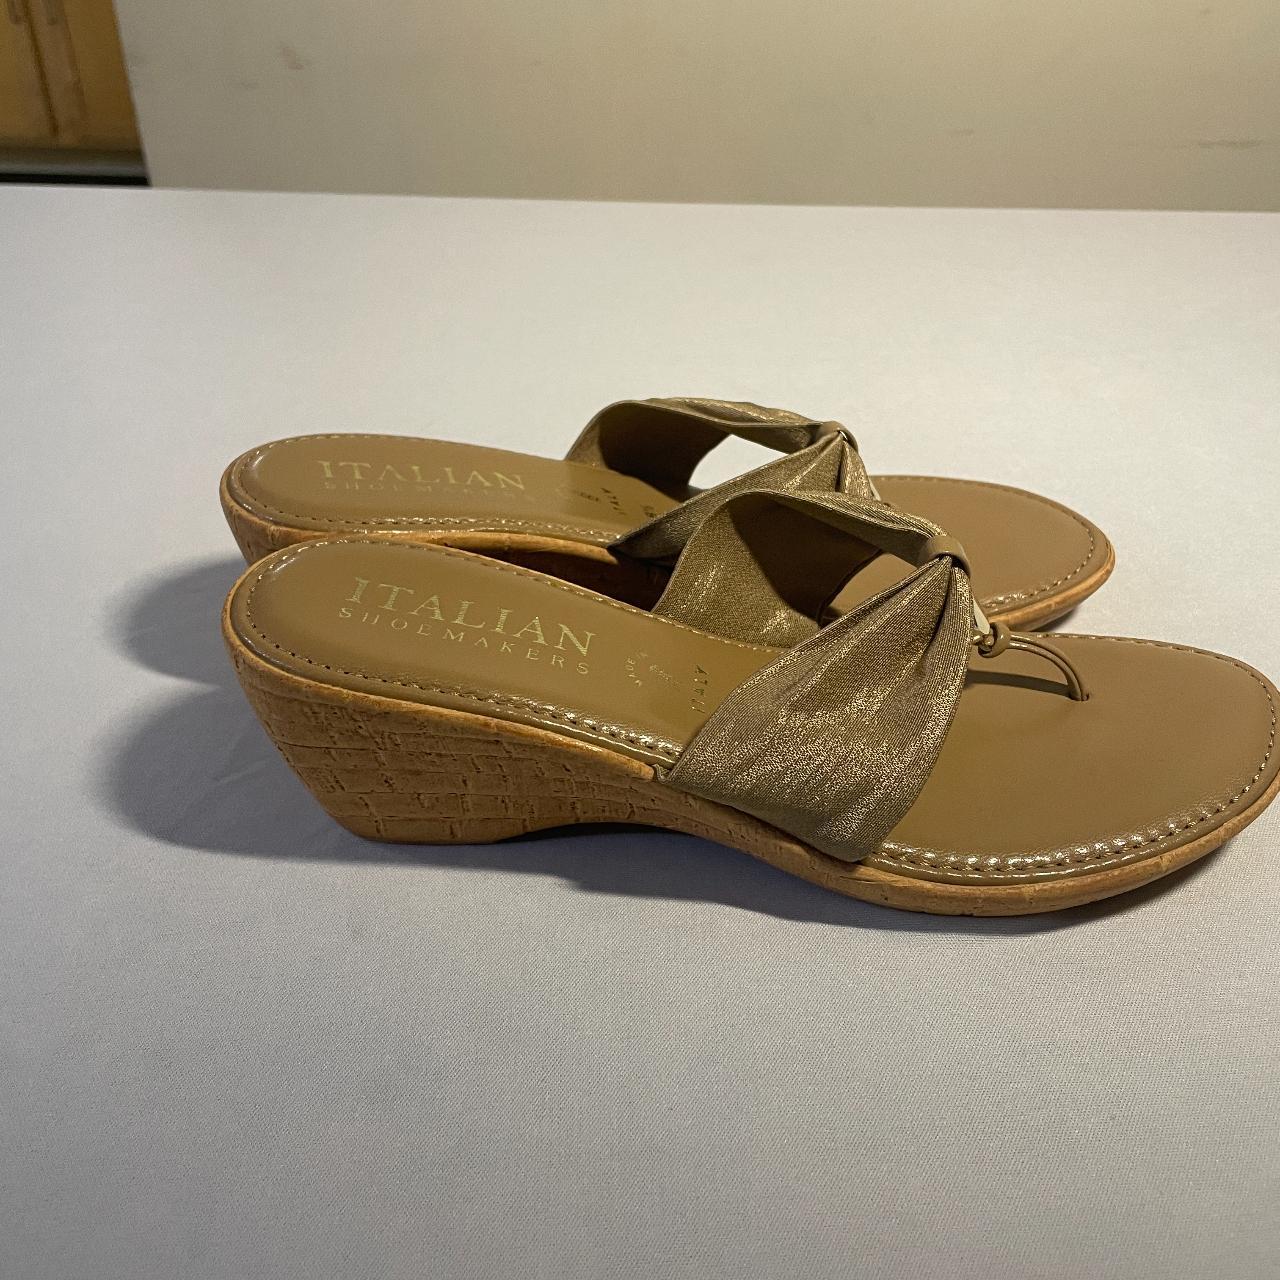 Italian Shoemakers Women's Gold and Tan Sandals | Depop